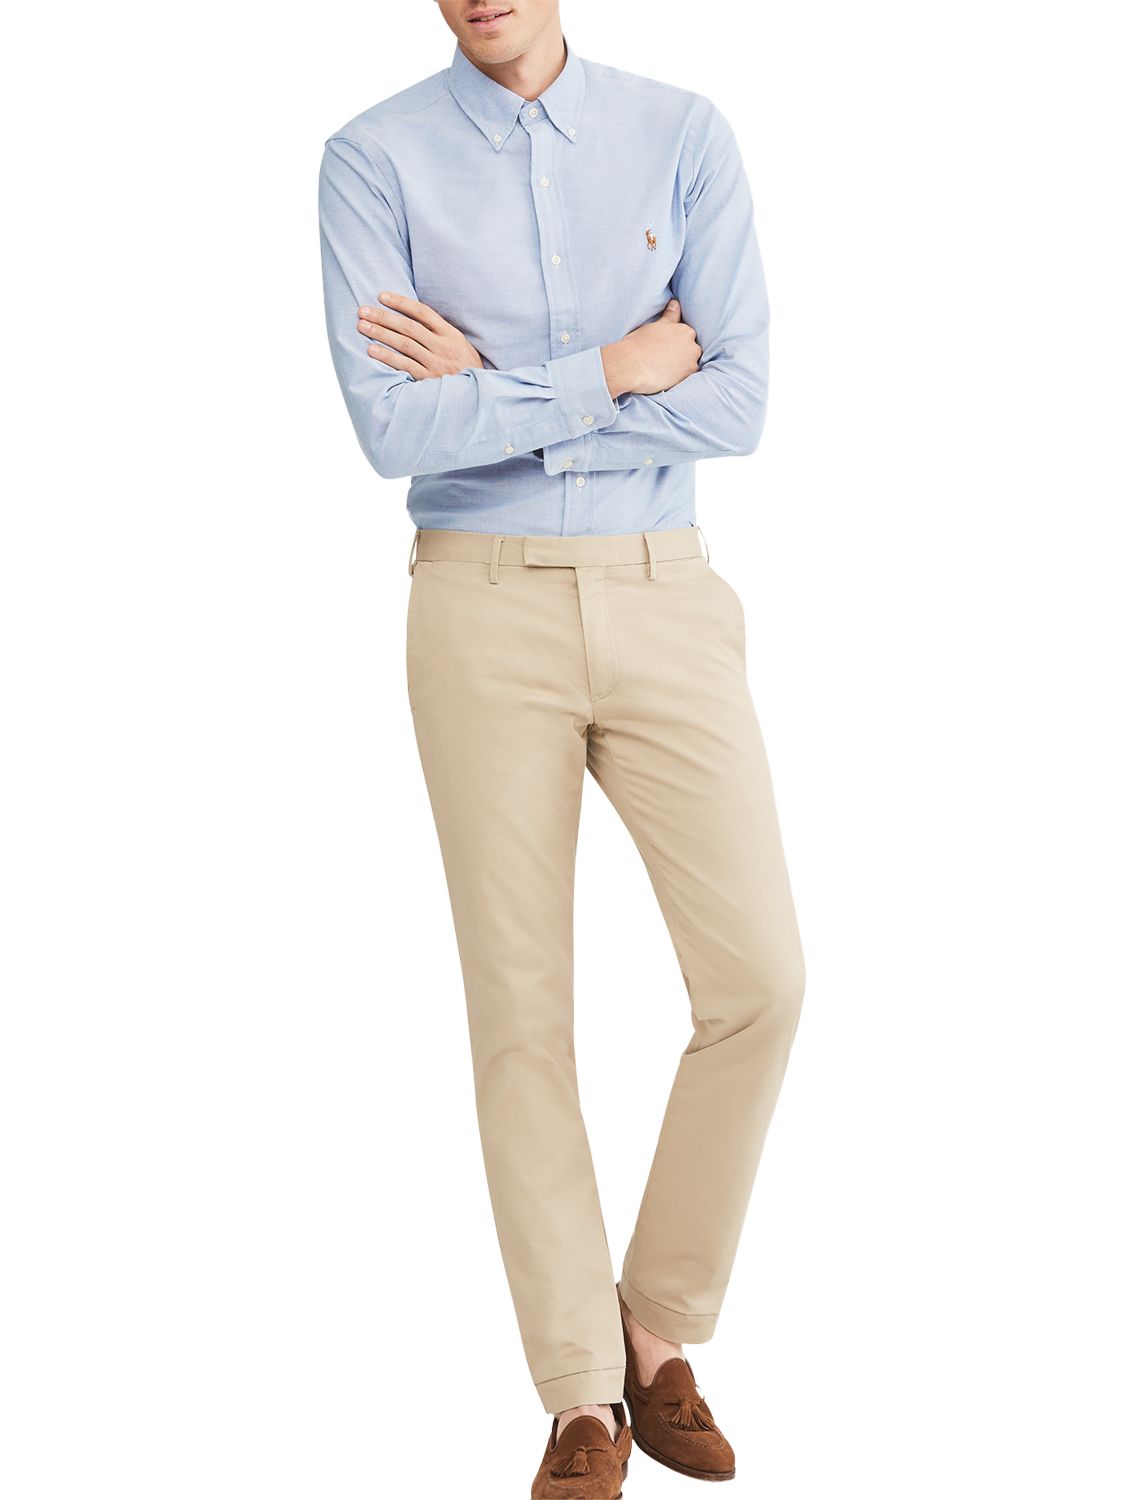 Polo Ralph Lauren Hudson Slim Fit Stretch Cotton Trousers, Classic Khaki, 32R